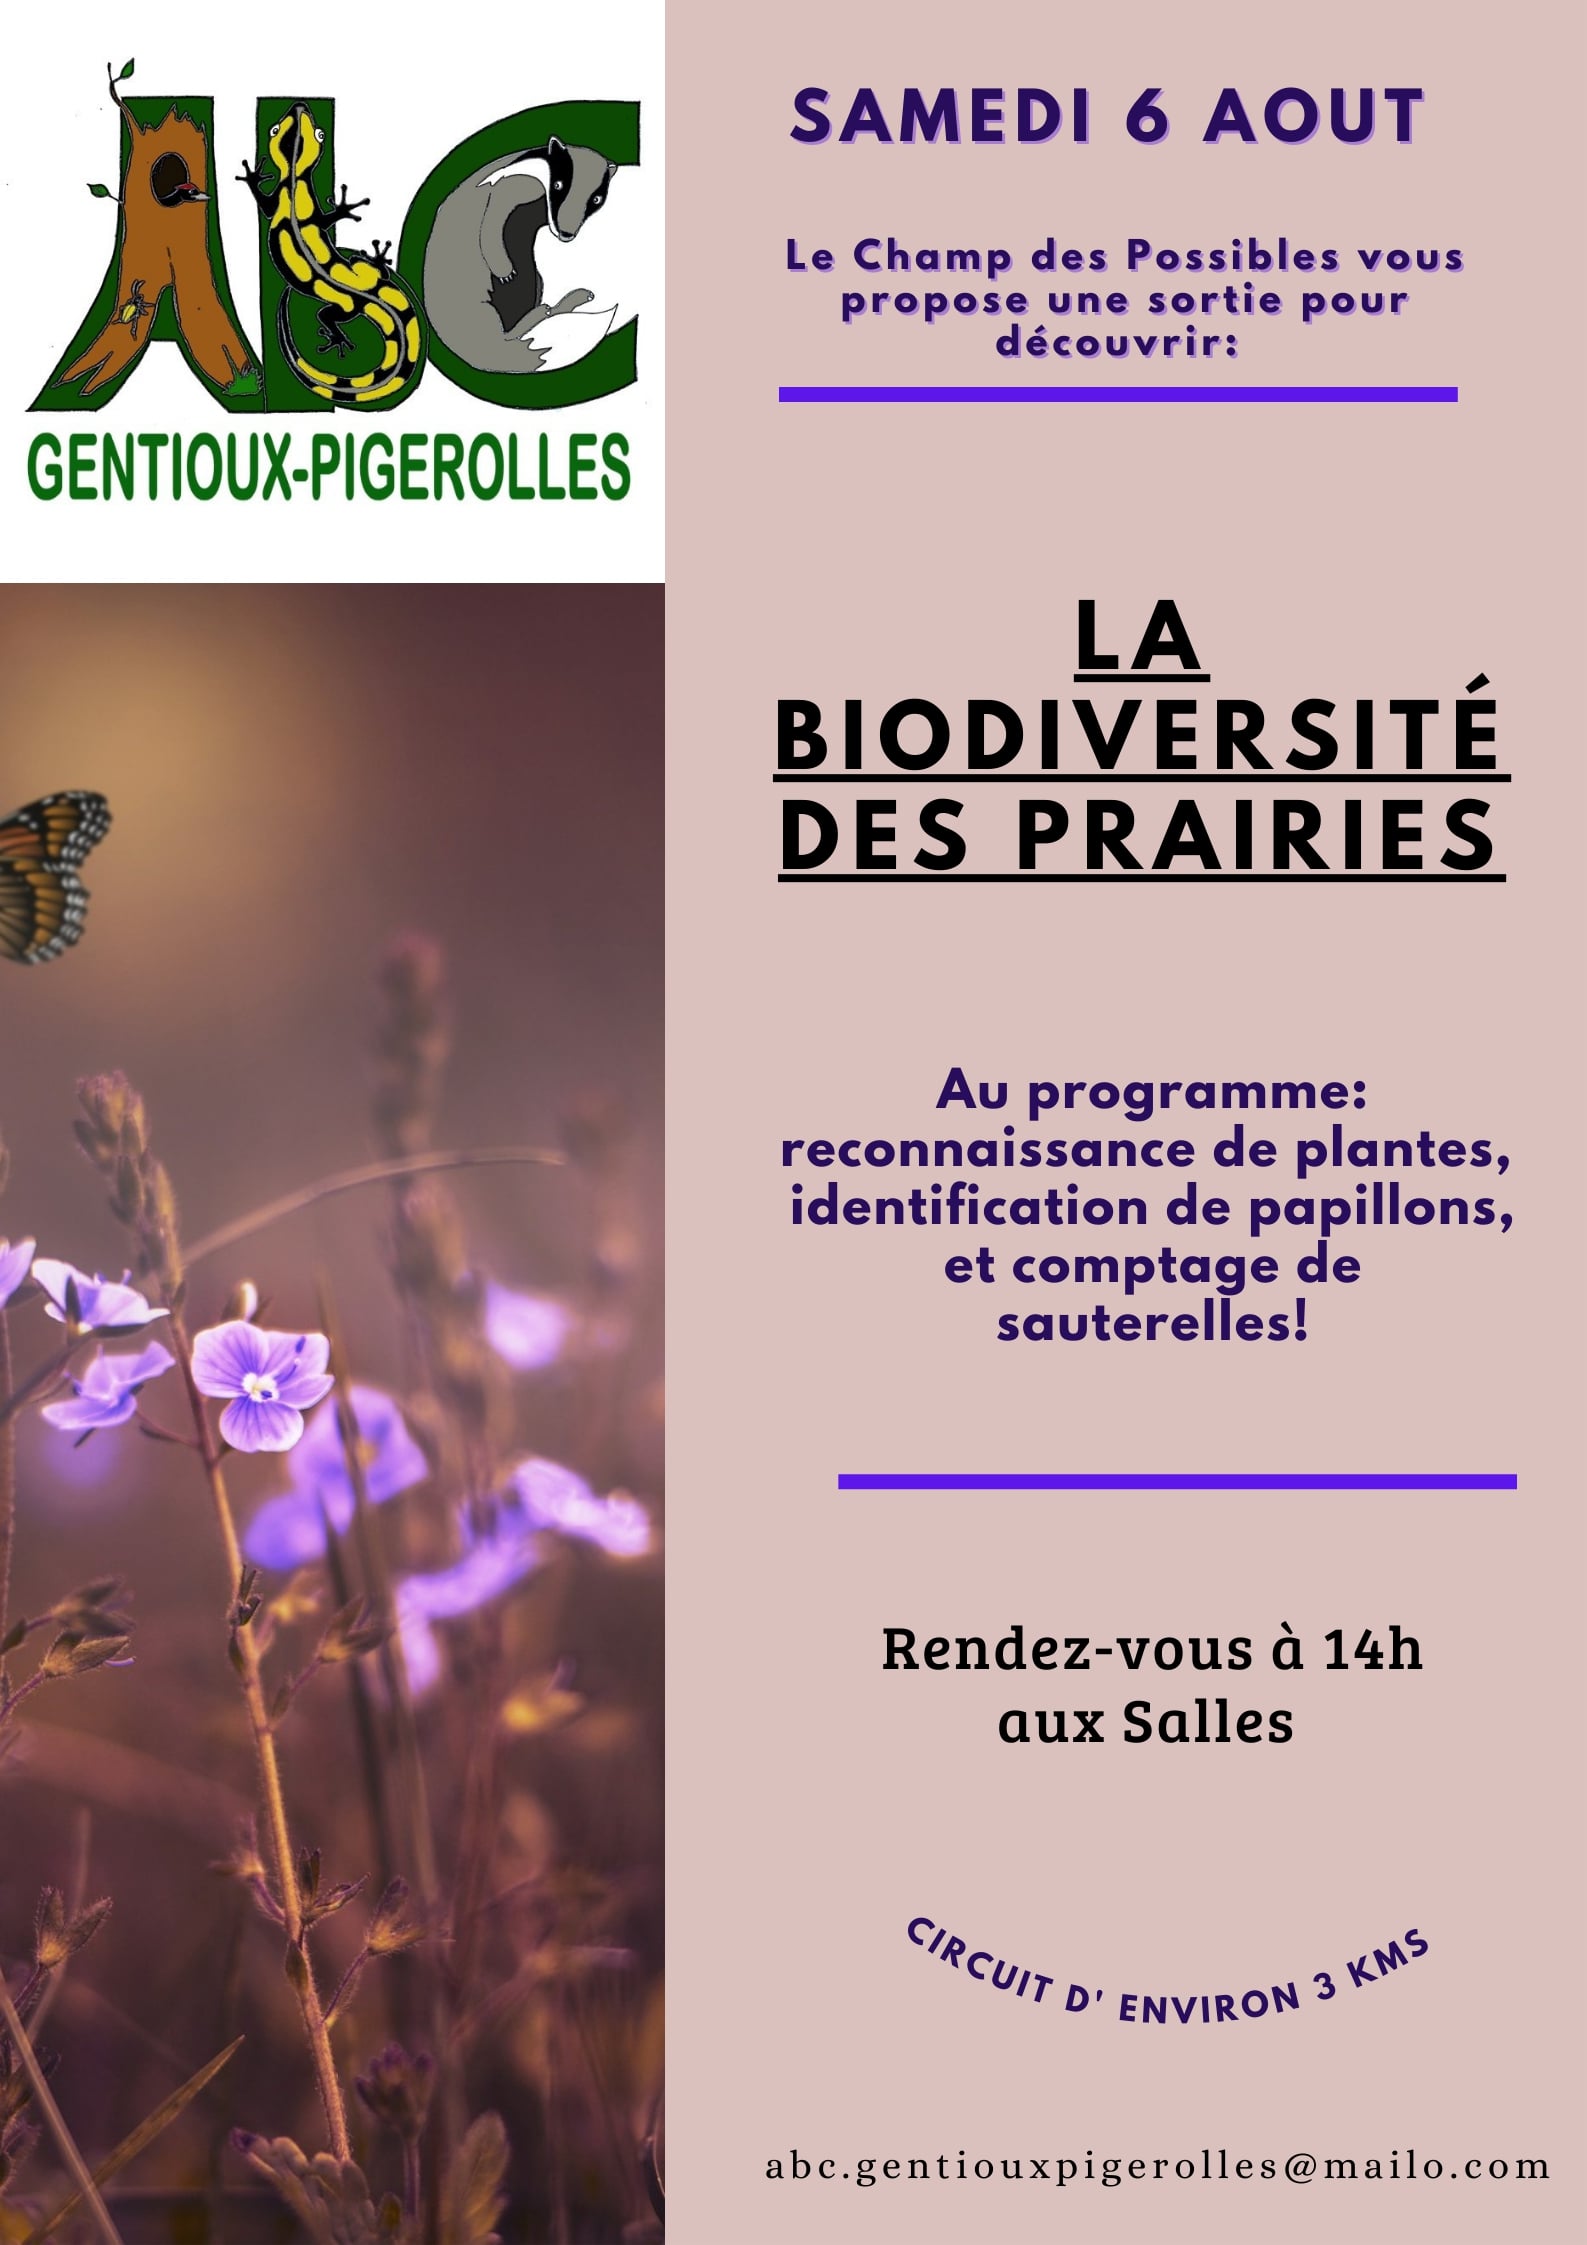 Samedi 6 août Sortie la biodiversité des pariries